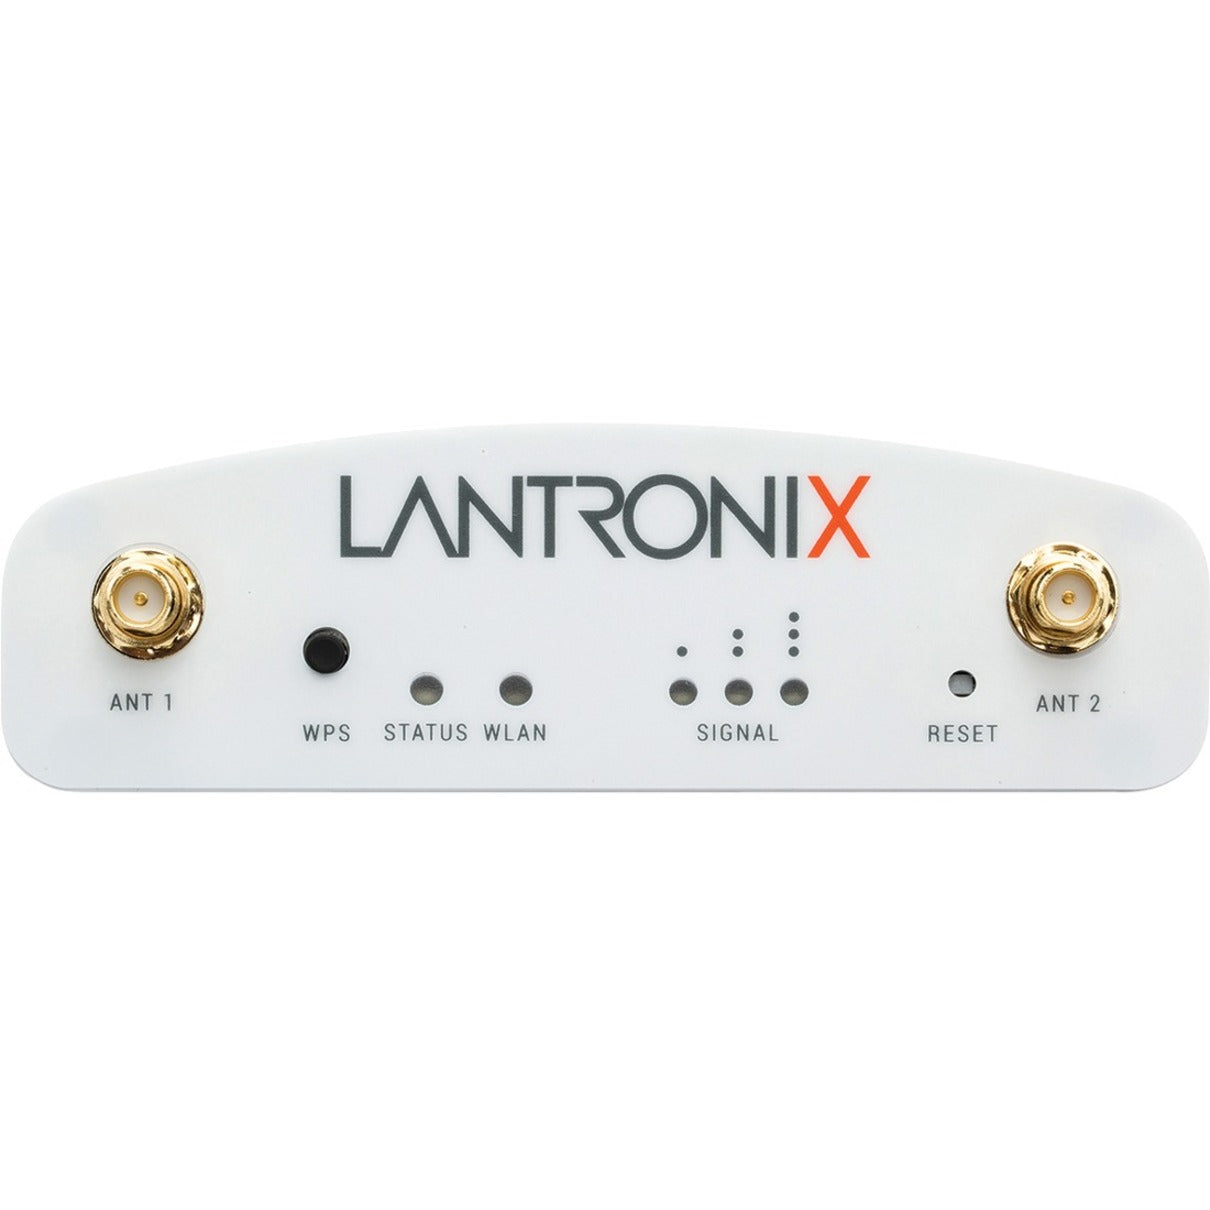 Lantronix SGX5150103US SGX 5150 IoT Device Gateway, 11AC 1XRS232 USB ETH POE